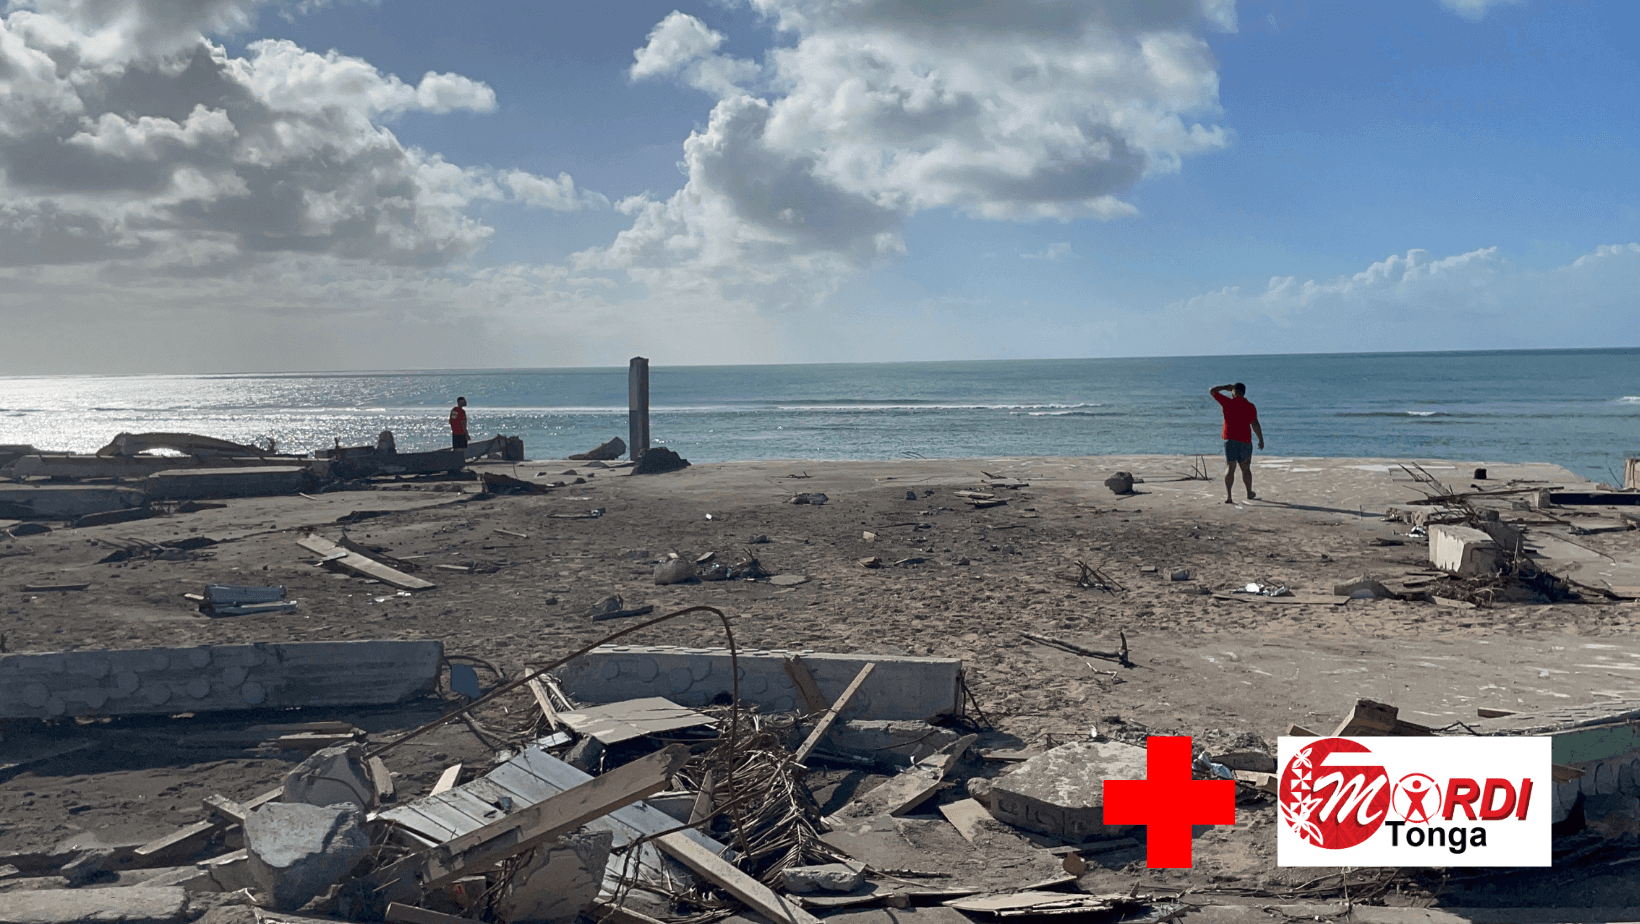 A coastline with buildings damaged by a tsunami